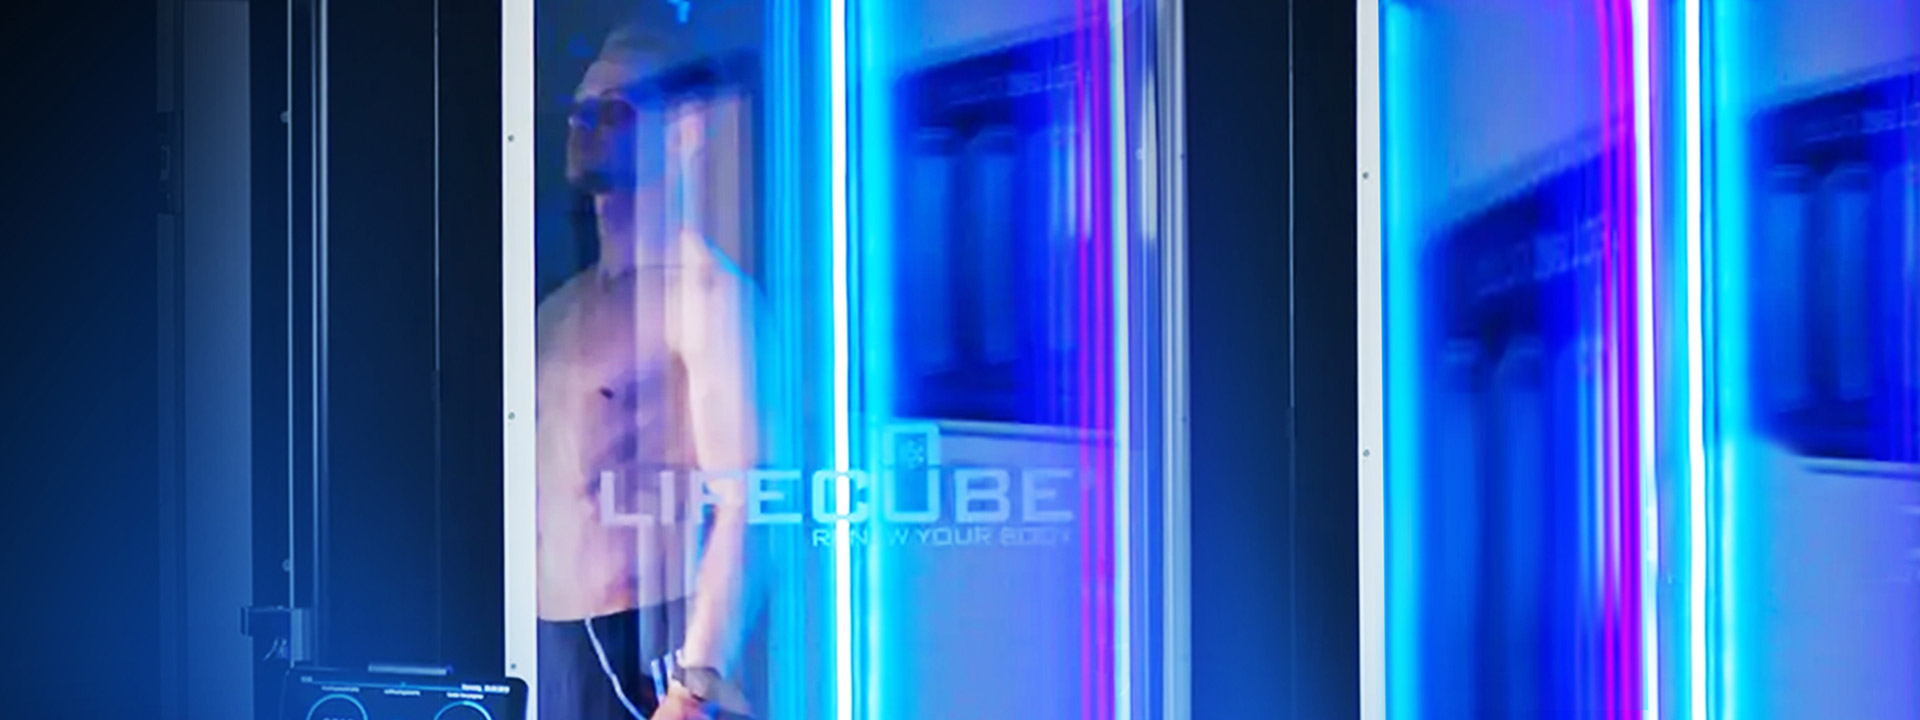 Lifecube Flyer RC Background Banner